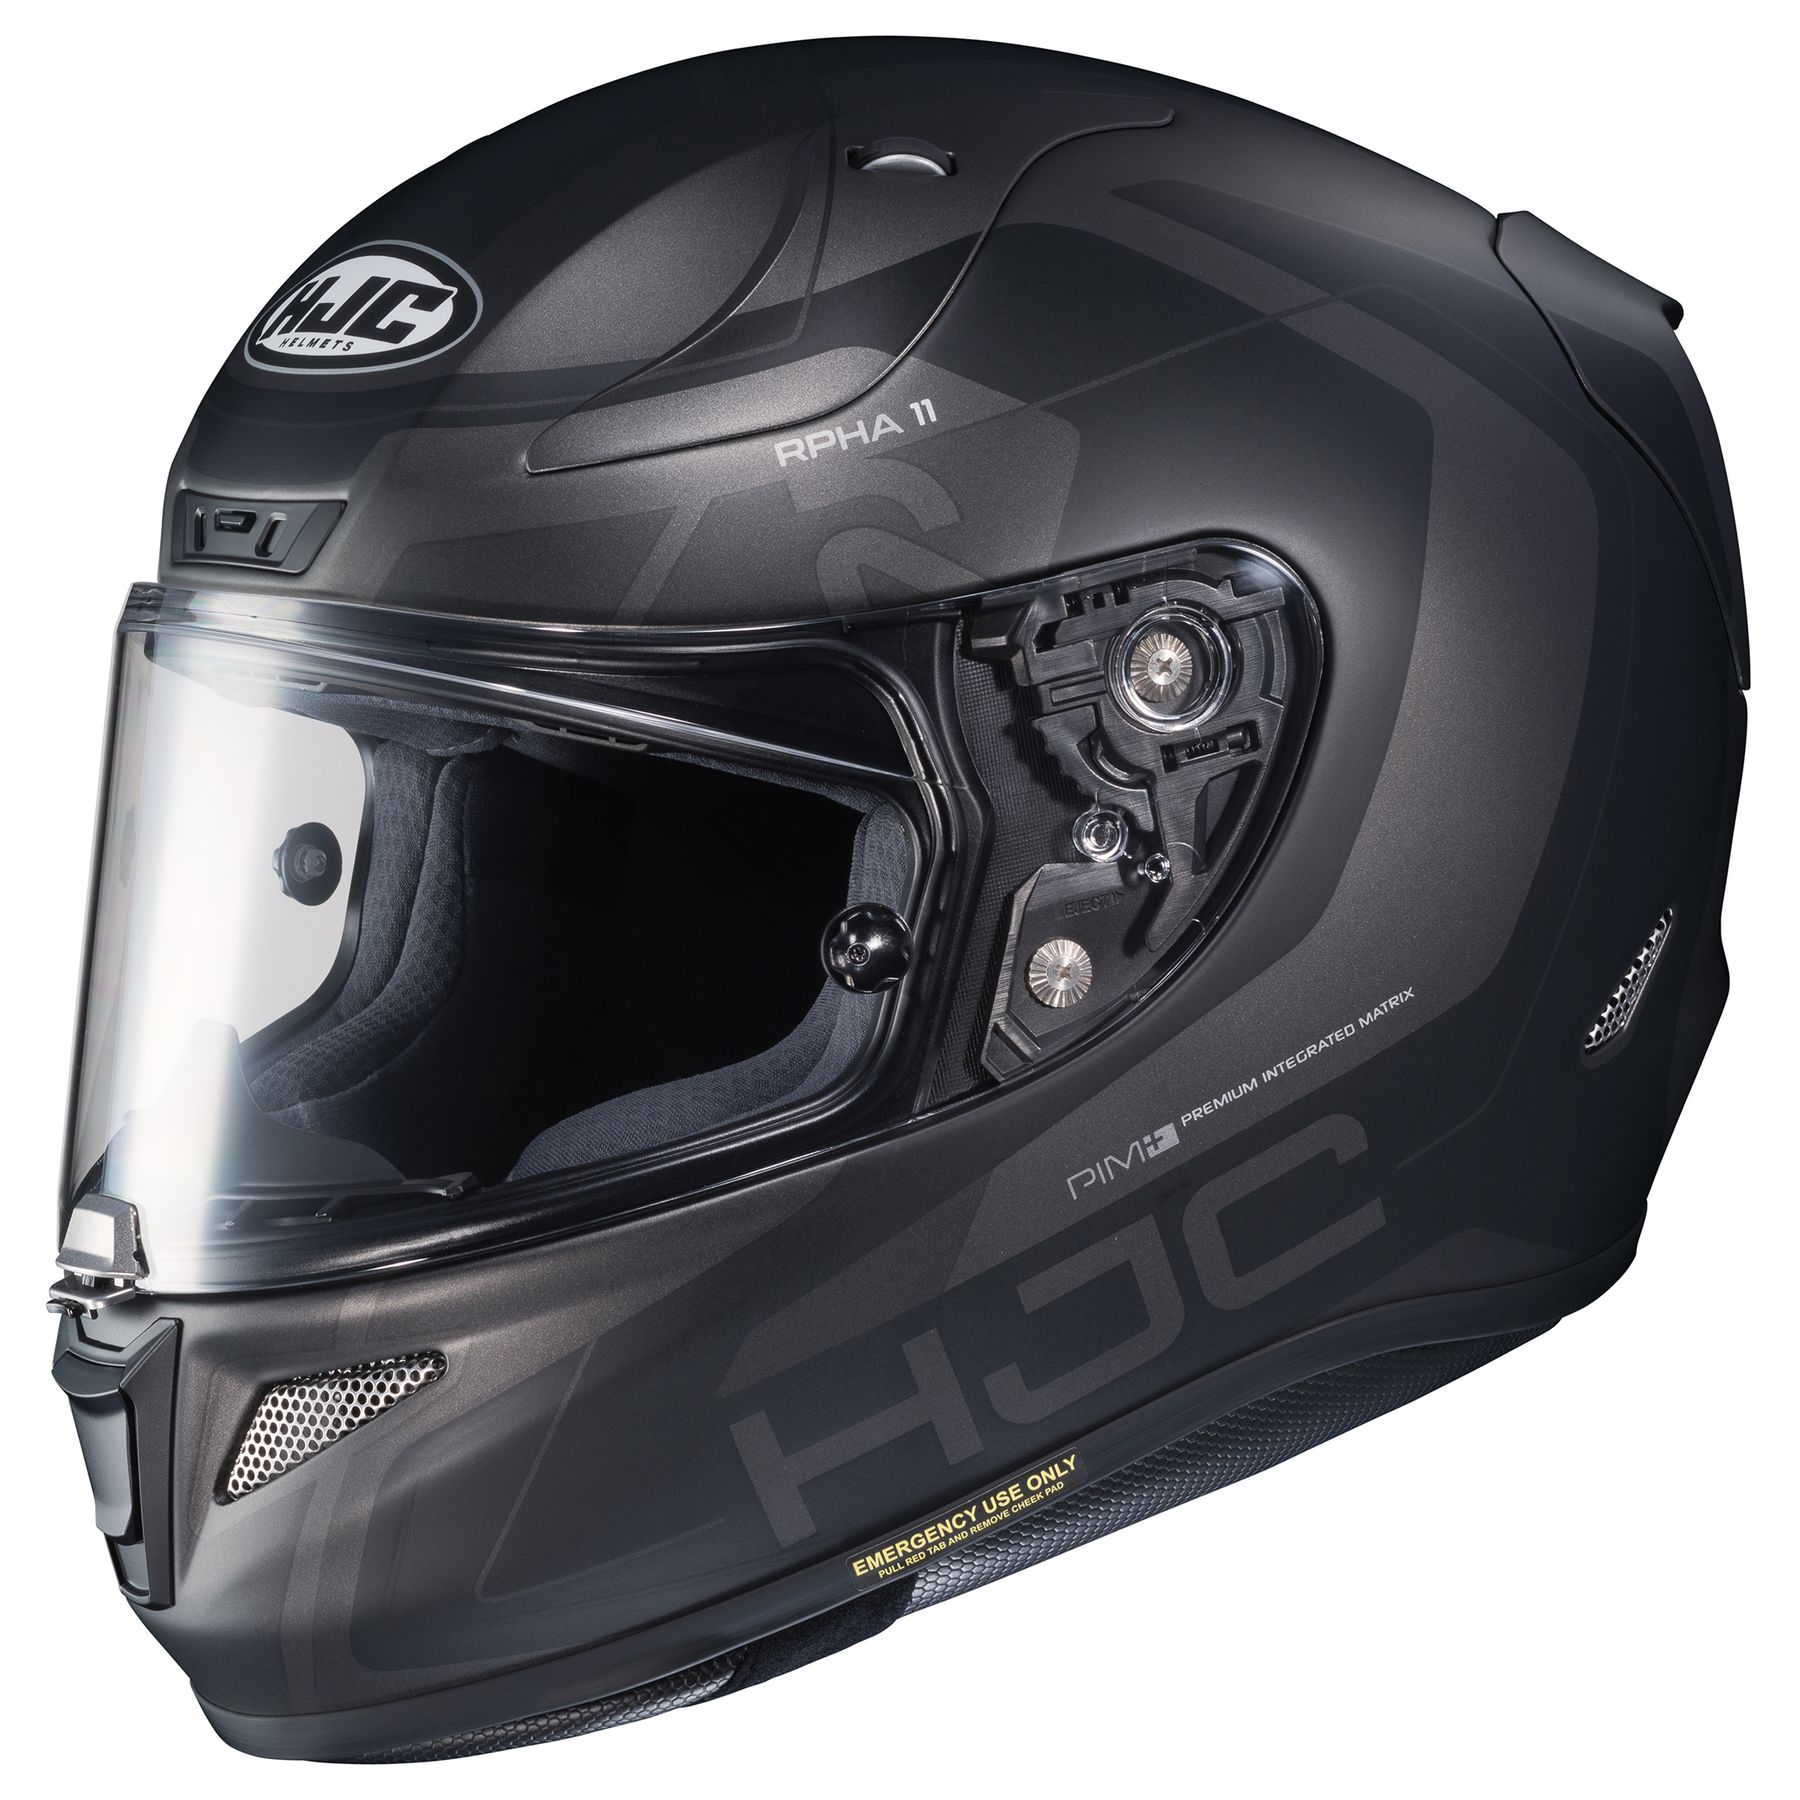 HJC RPHA 11 Pro Chakri Helmet